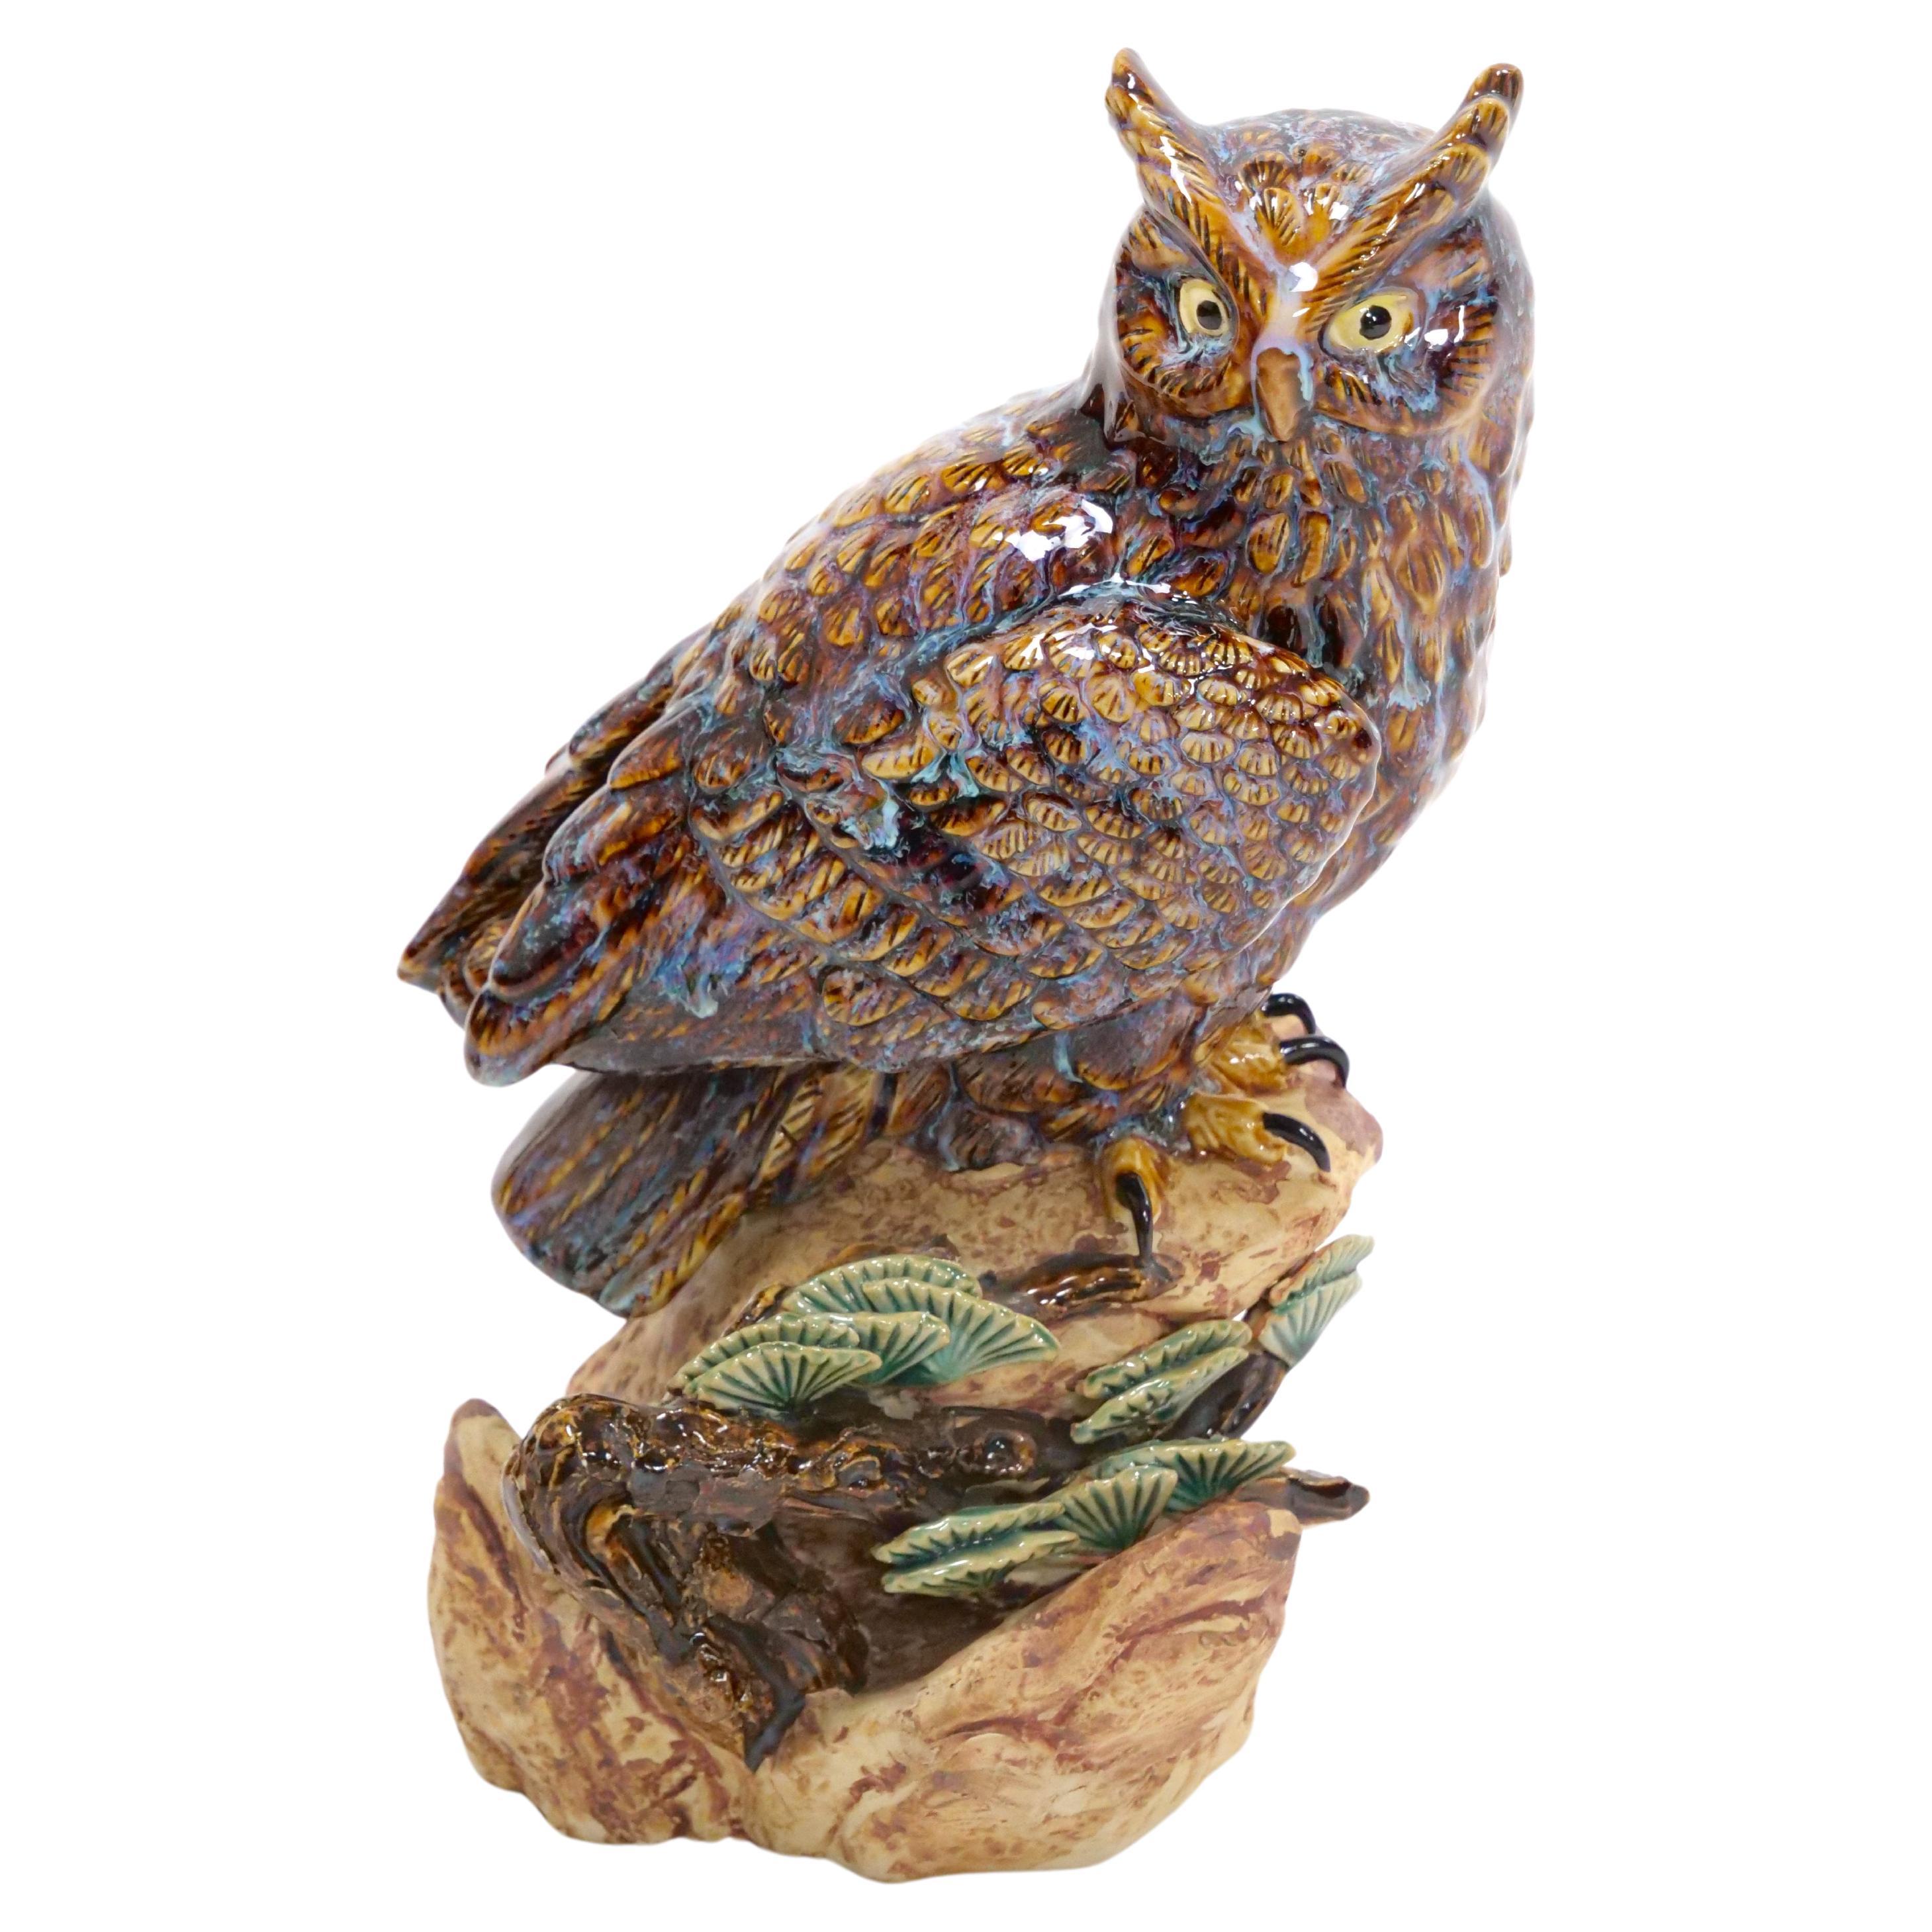  Mid-20th Century English Porcelain Decorative Owl Sculpture